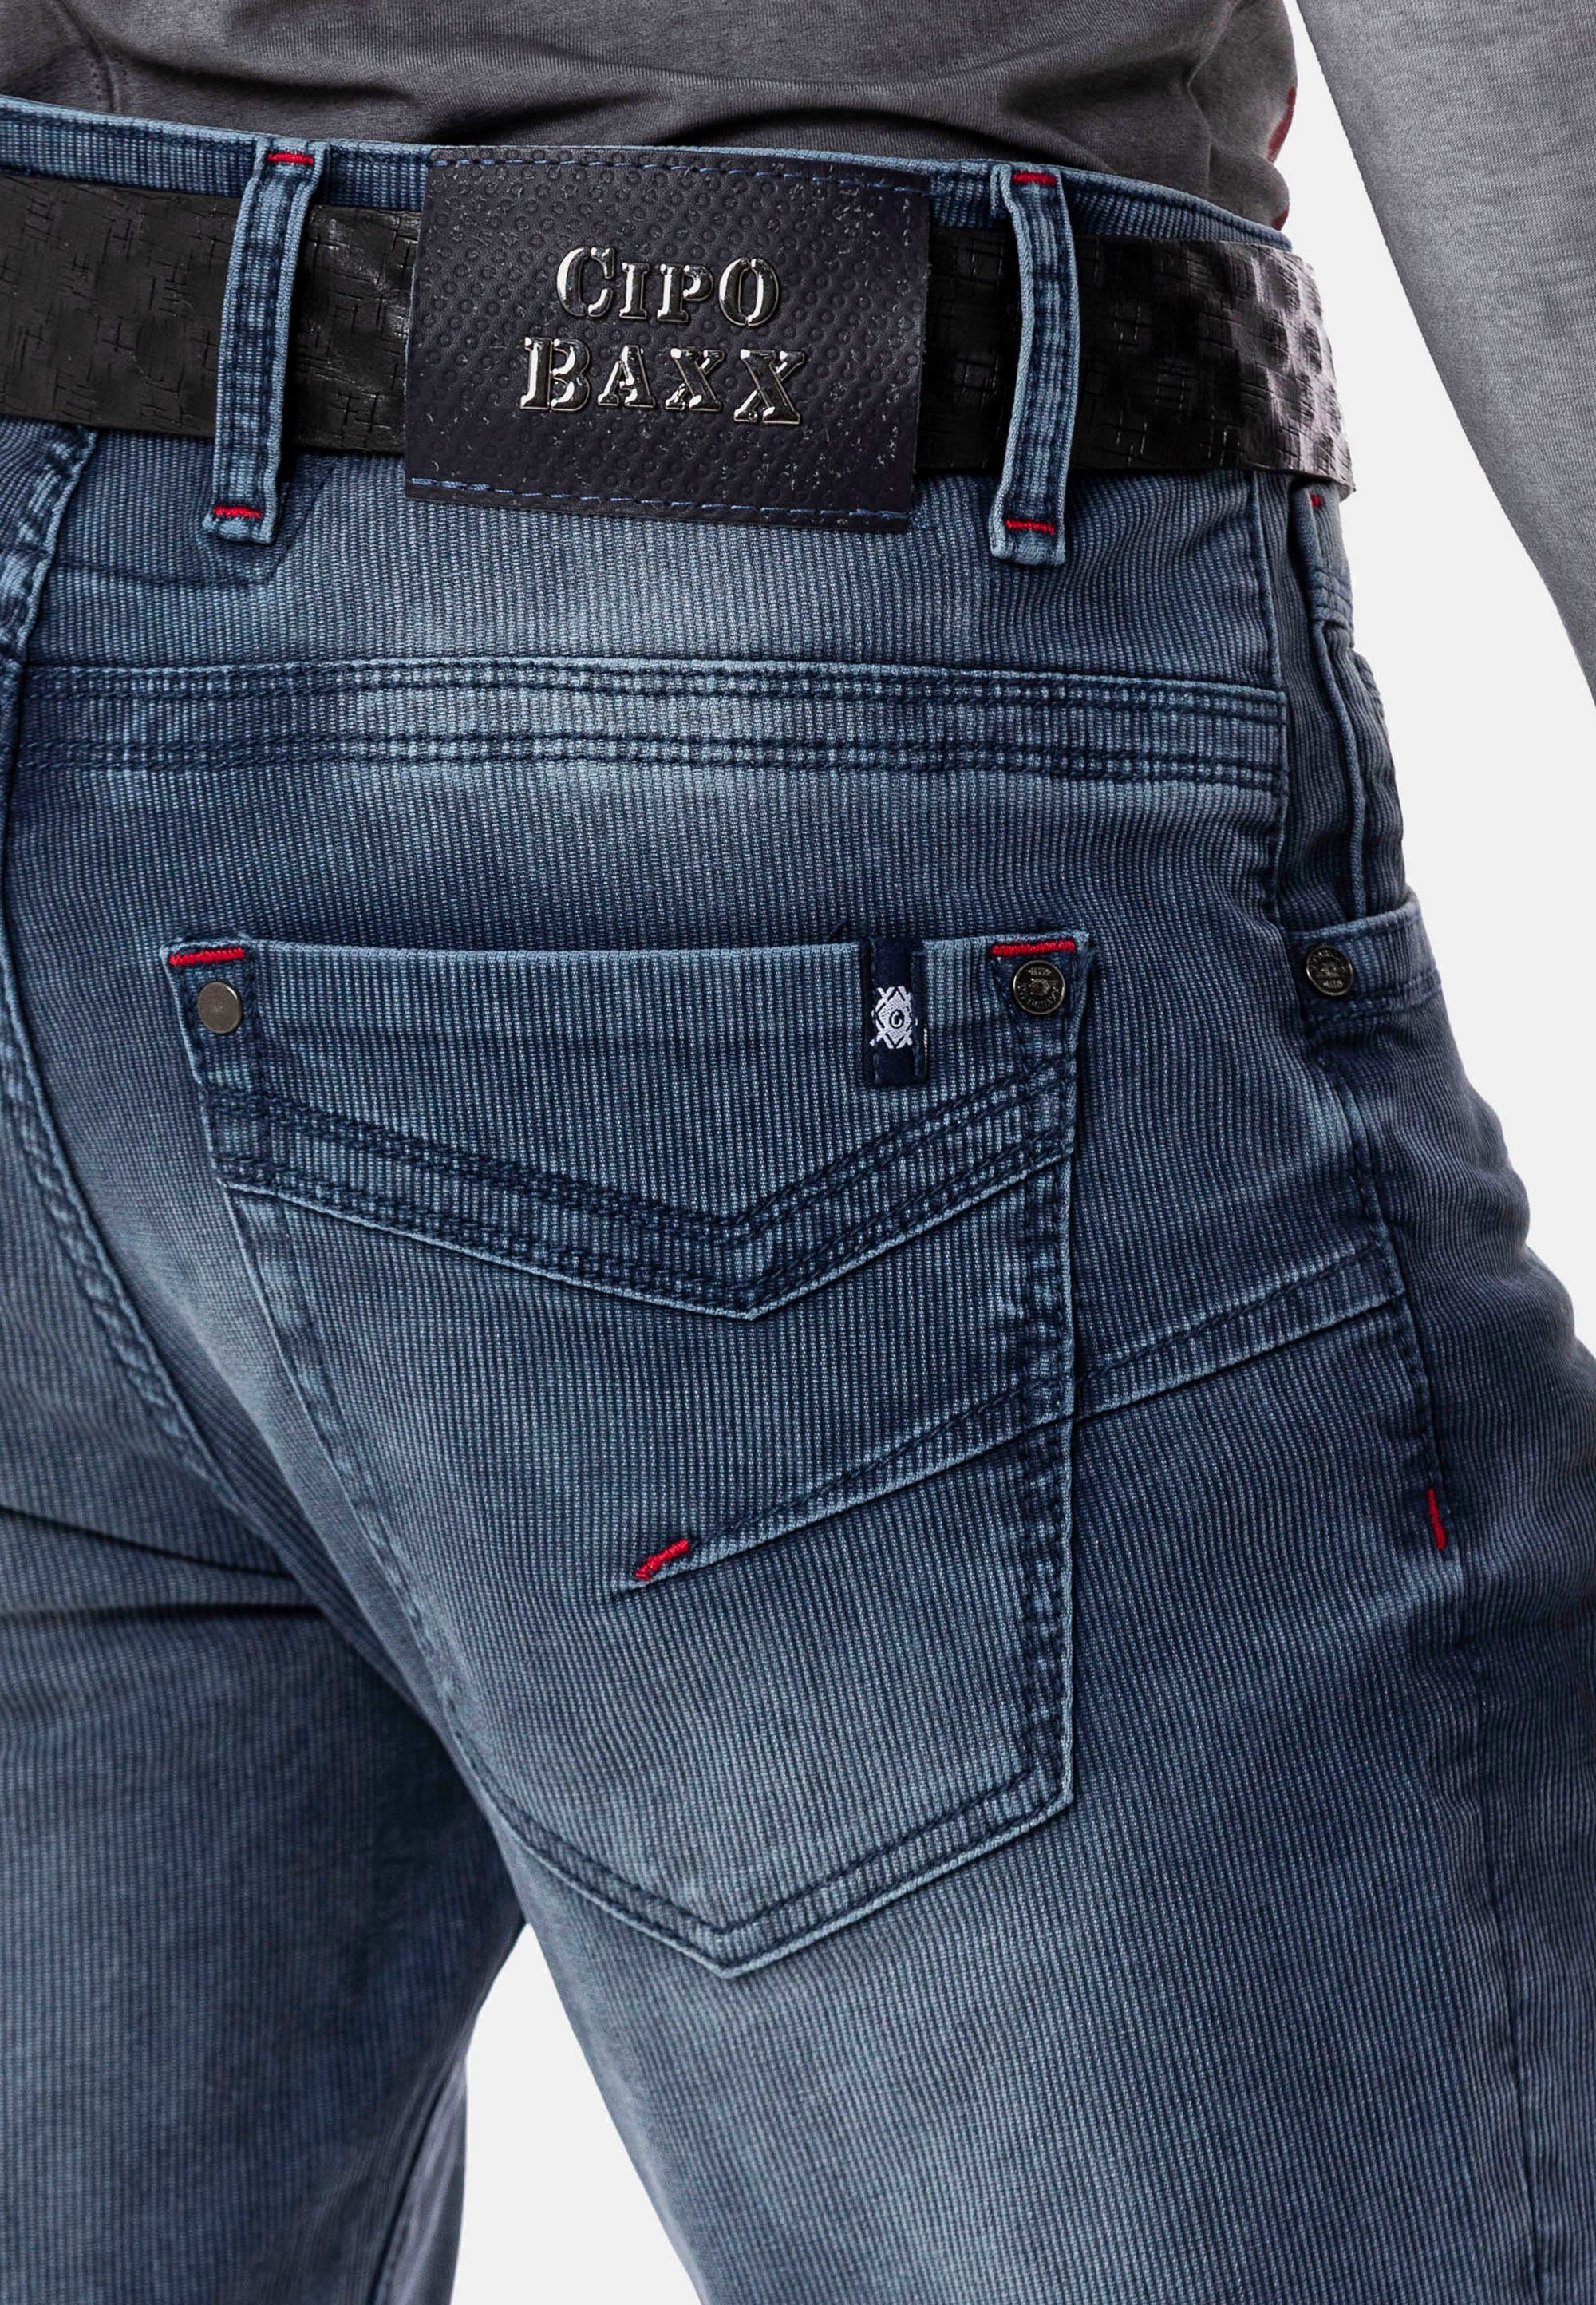 in Straight-Jeans & Cord-Design blau Cipo Baxx stilvollem